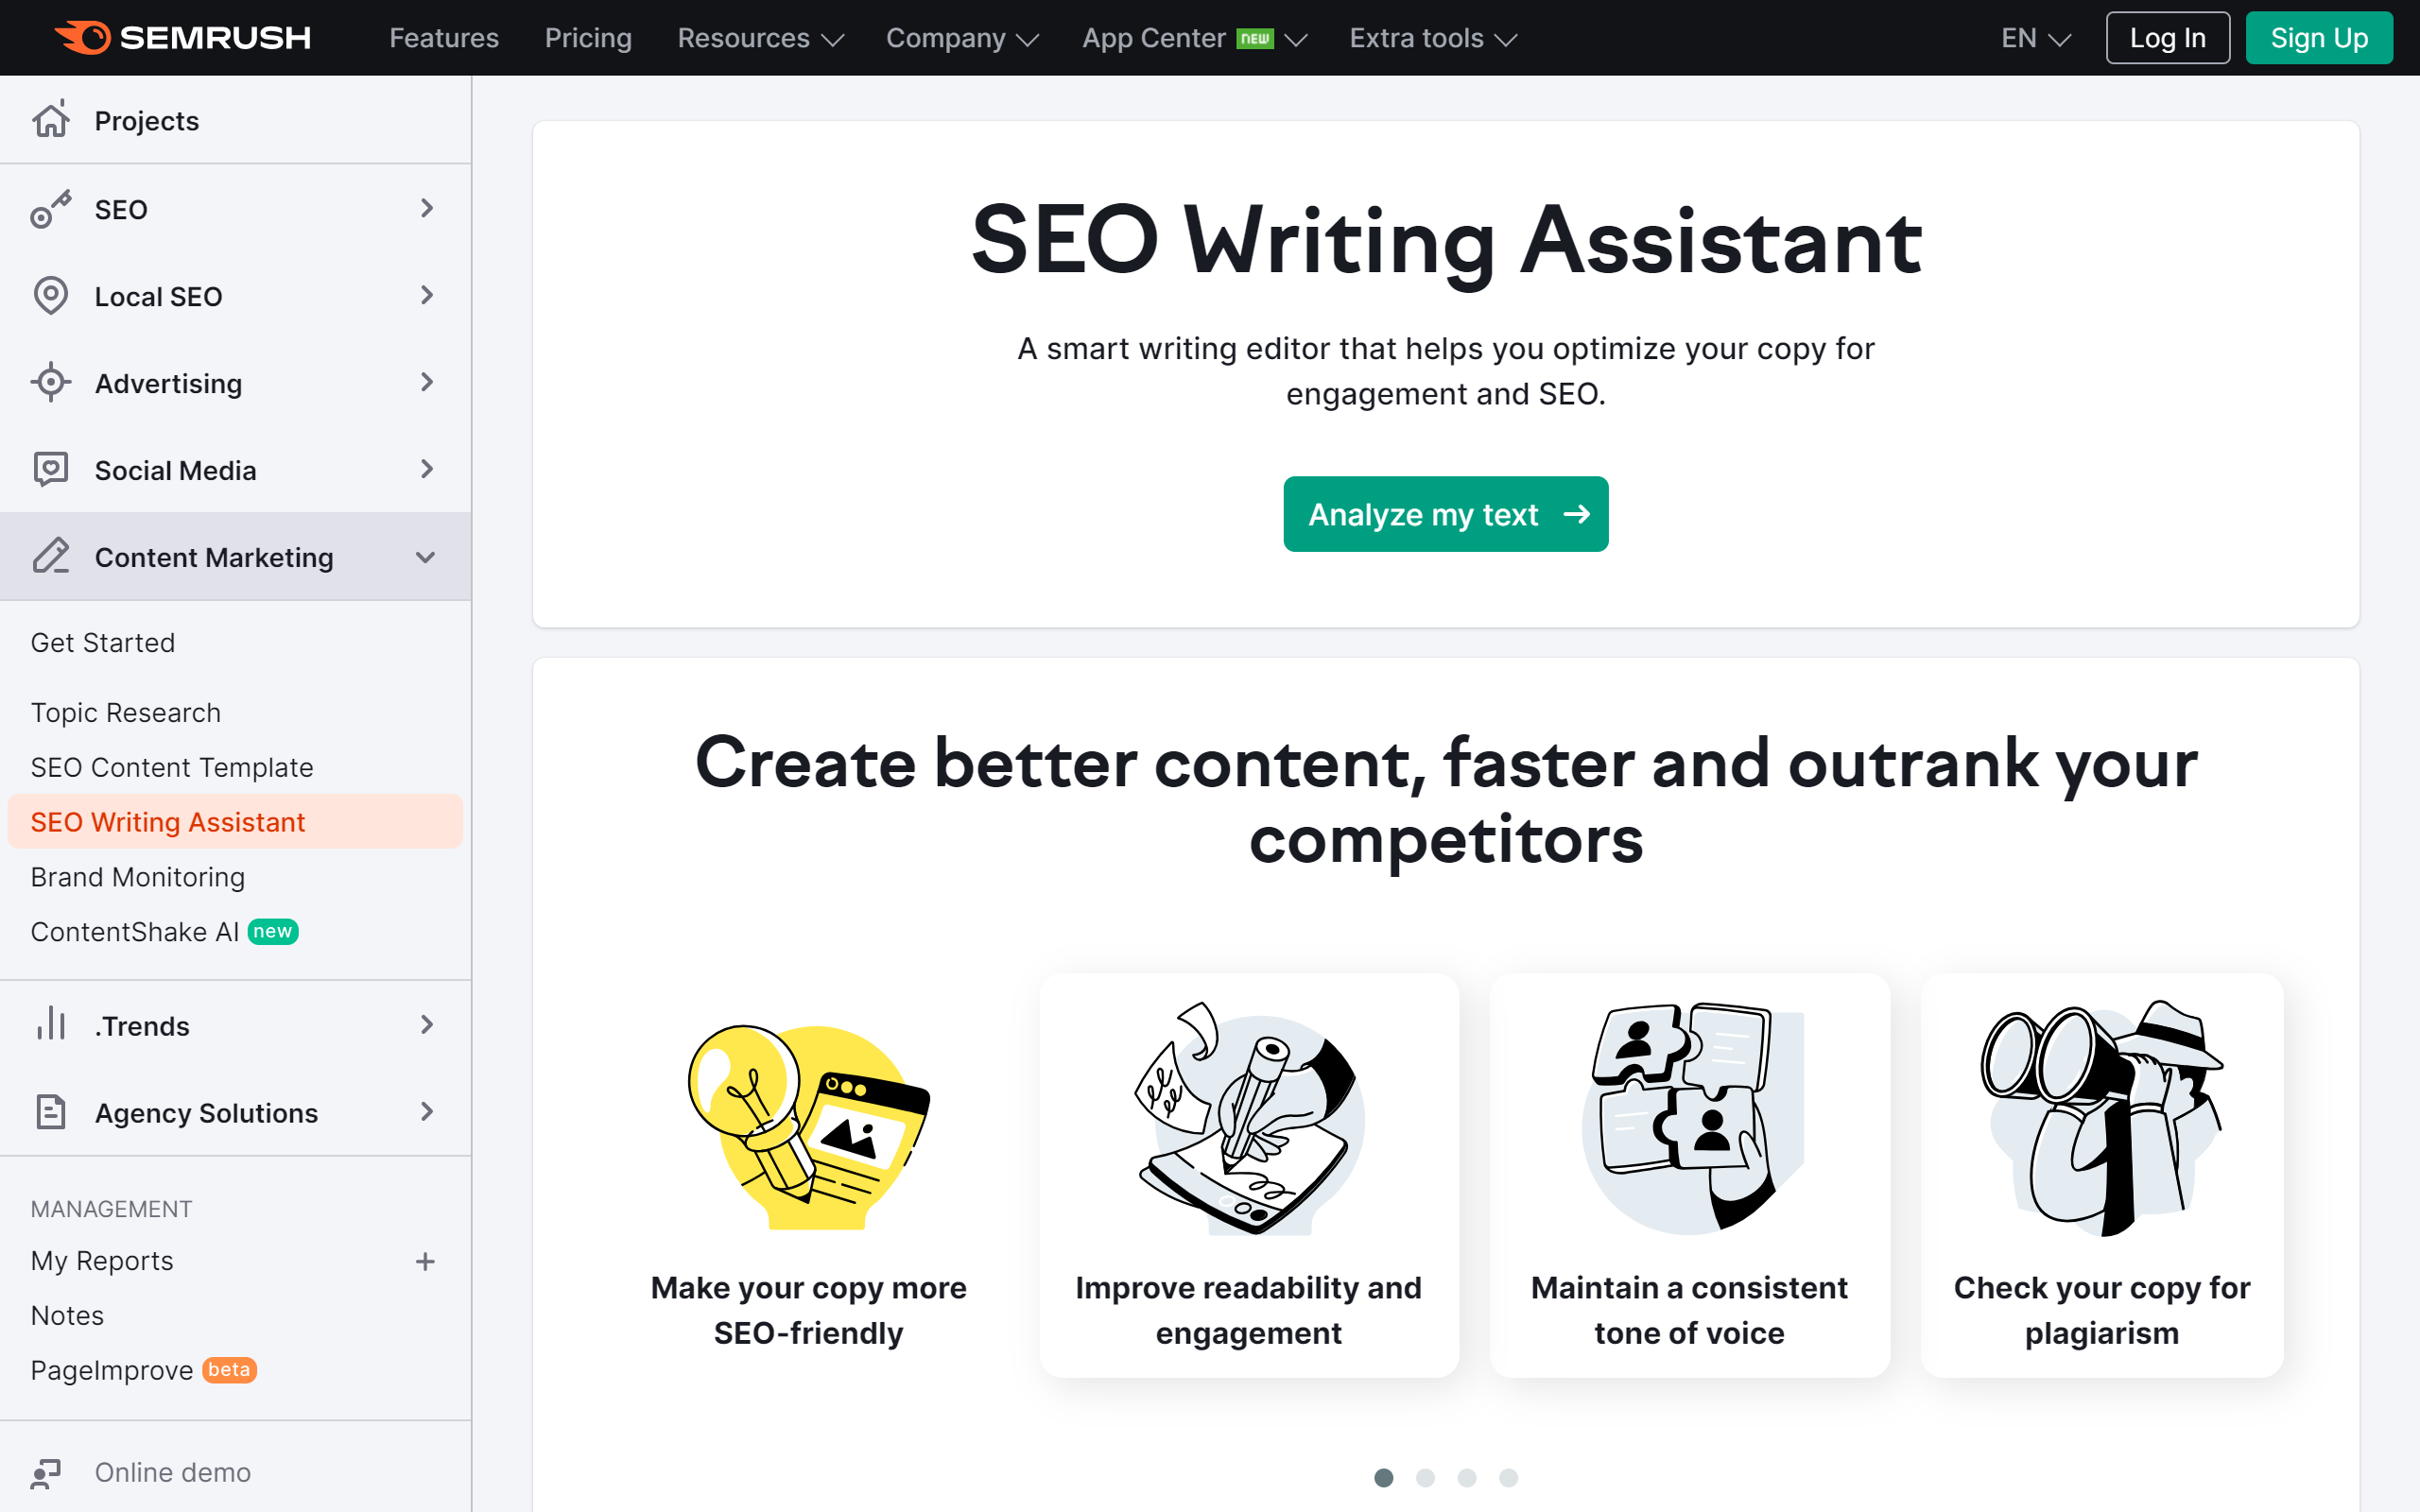 Semrush SEO Writing Assistant Content Creation Tool